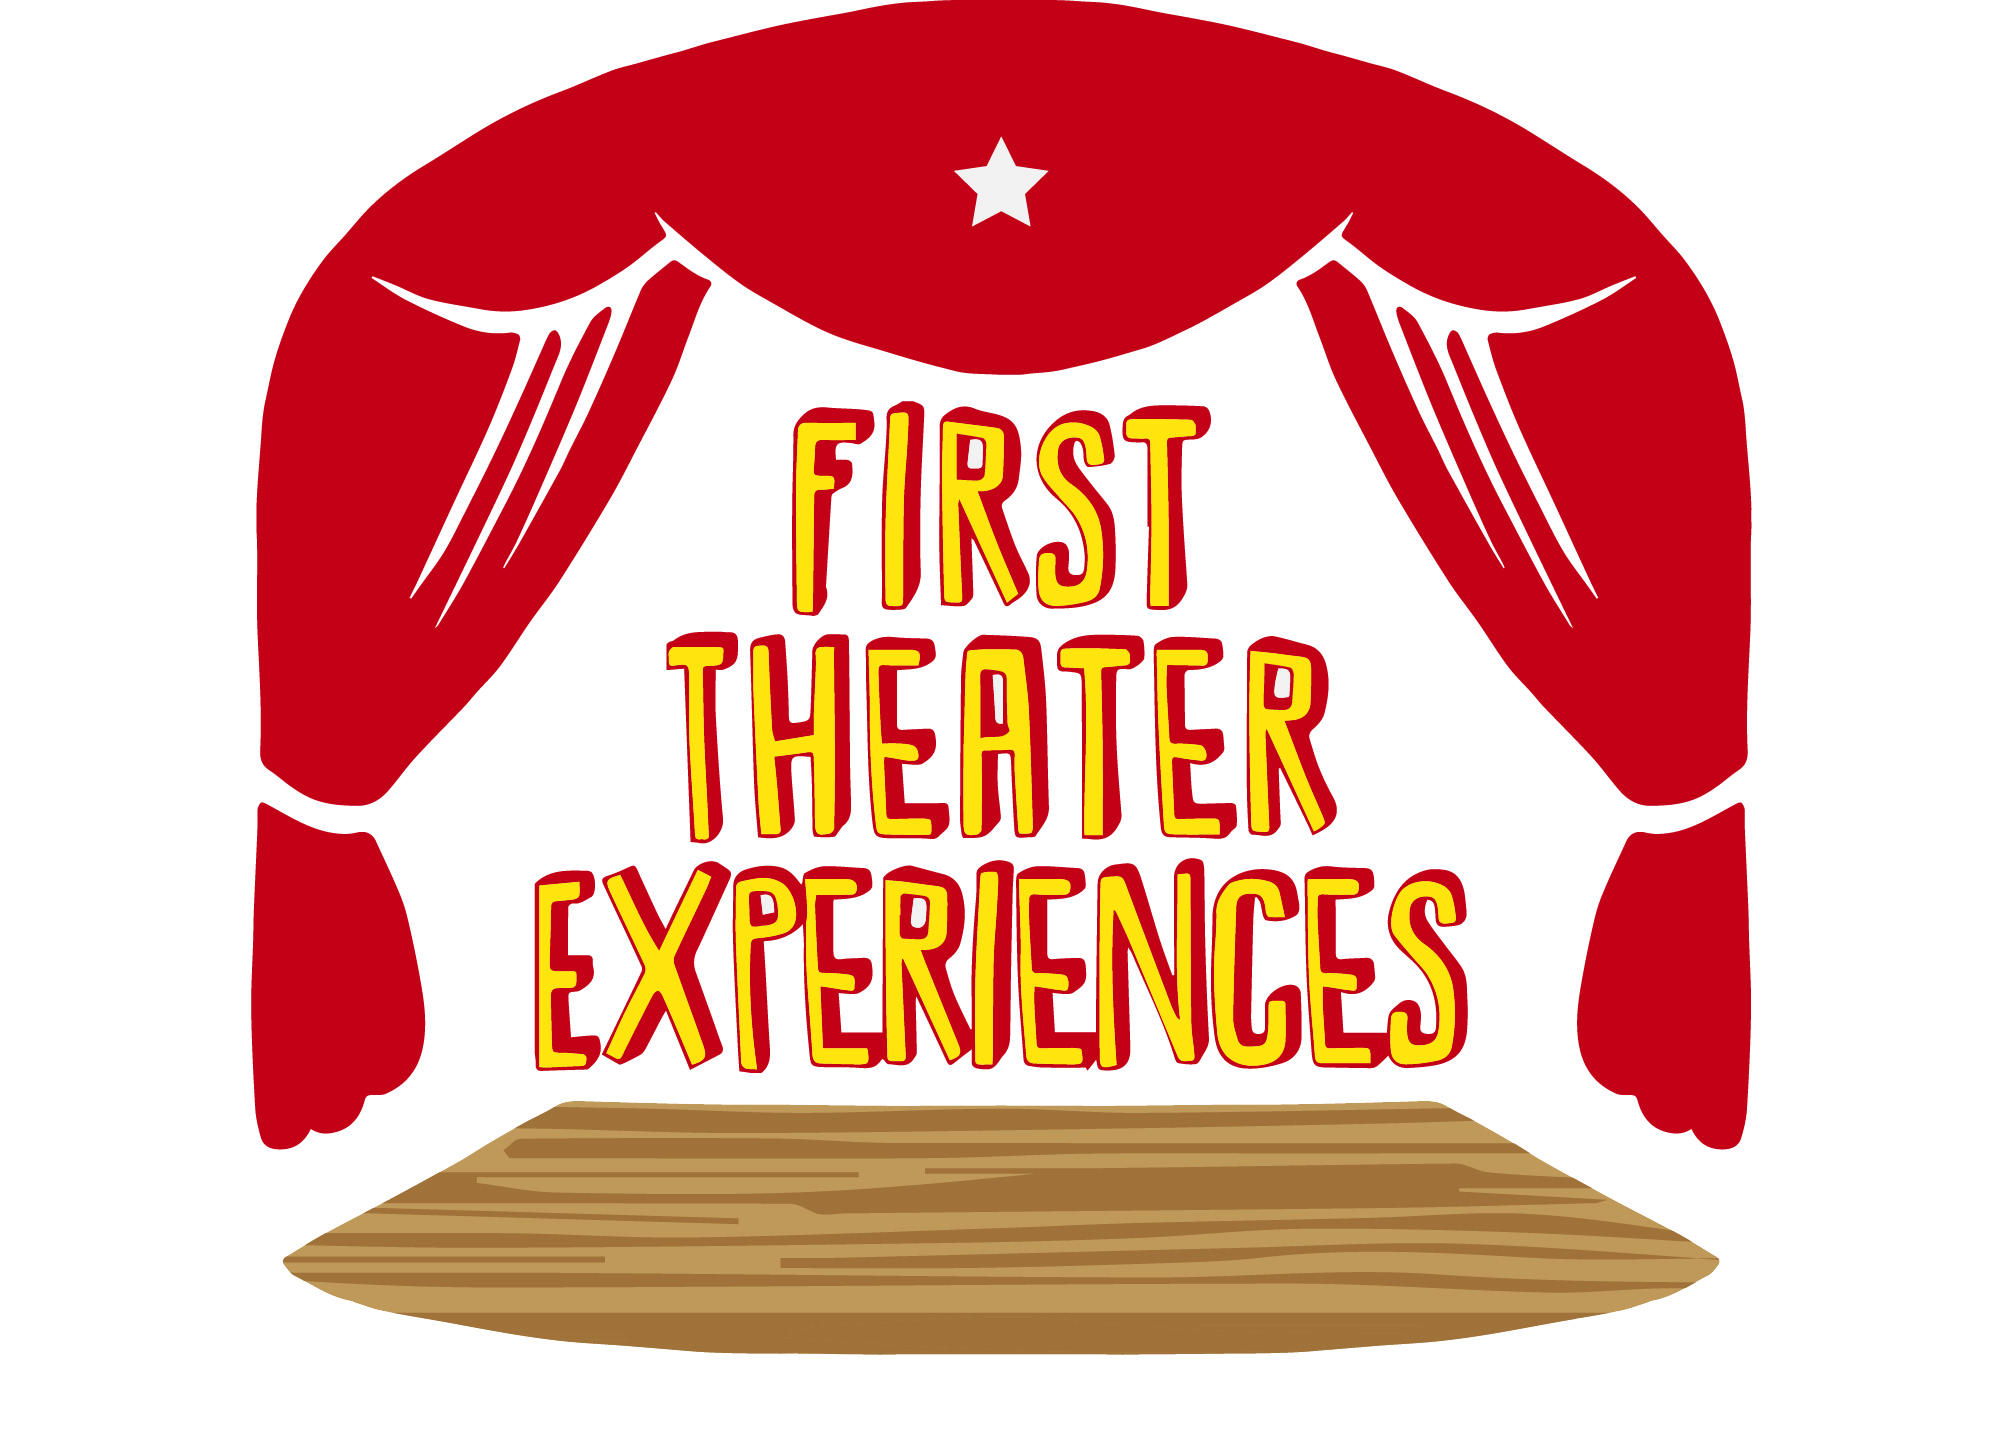 First theatre. Логотип театра. Логотип театральной студии. Эмблема театра для детей. Детской театральной студии лого.